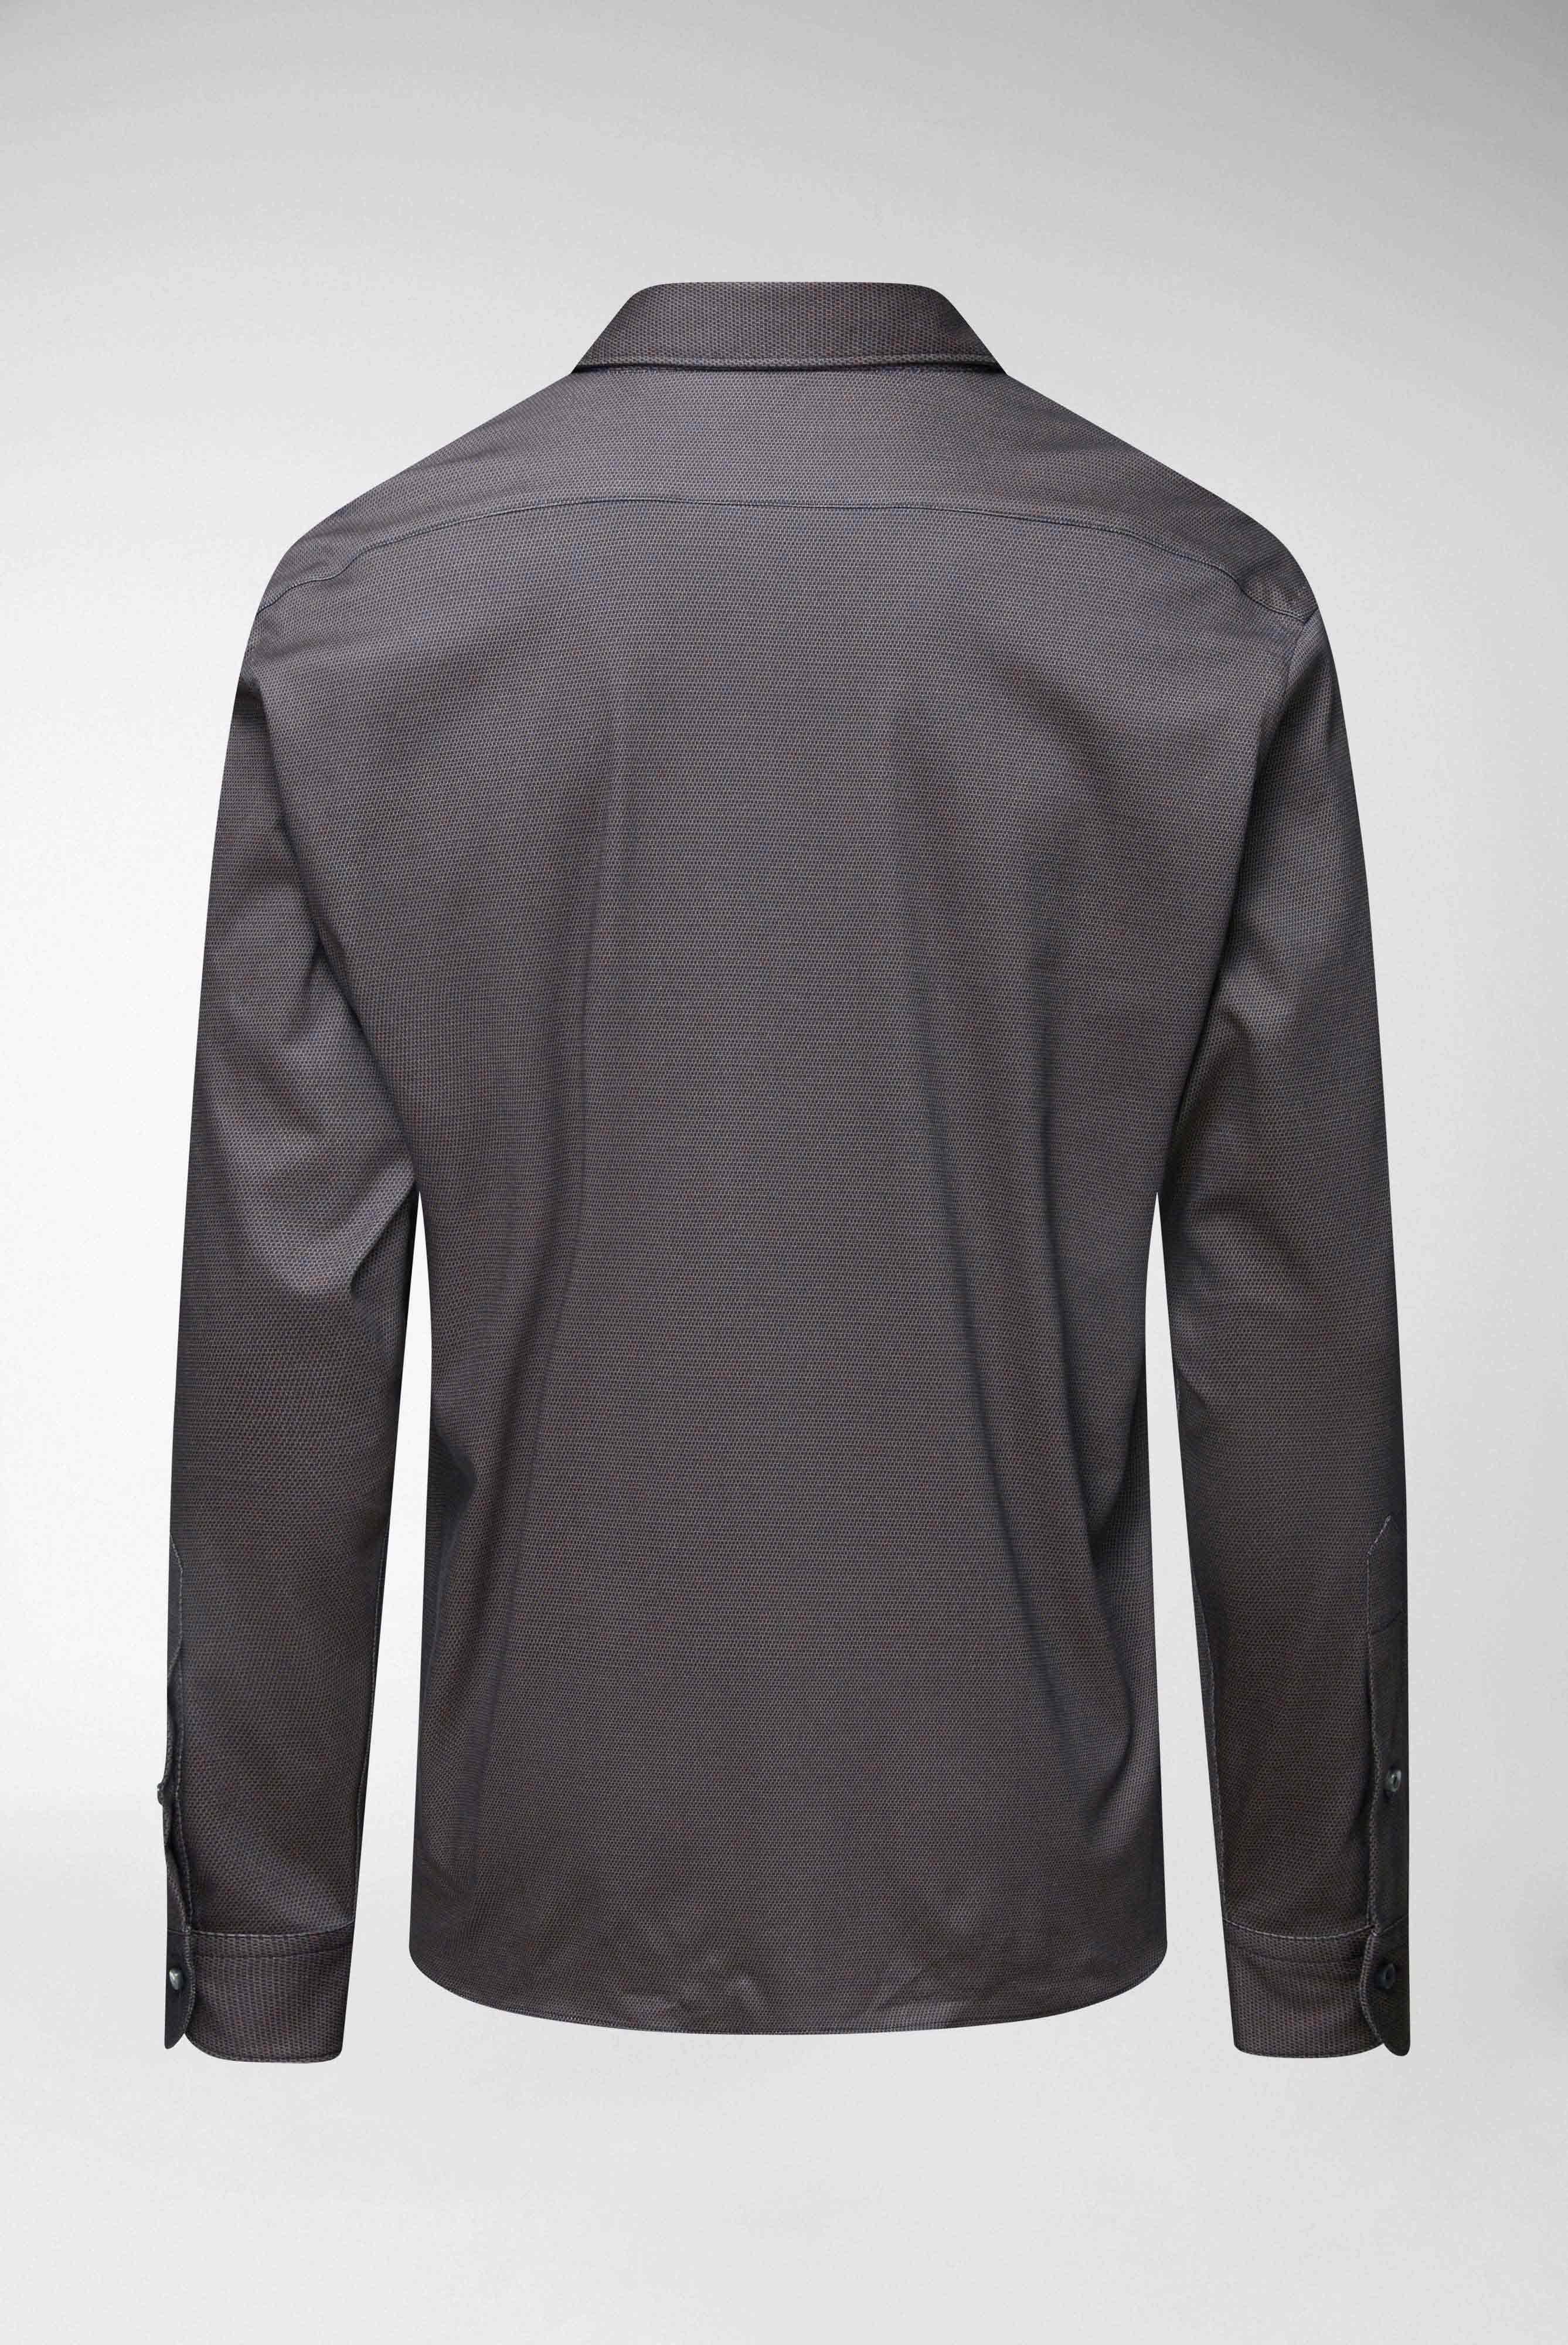 Casual Hemden+Jersey Hemd mit Mikro Druck Tailor Fit+20.1683.UC.187551.160.M